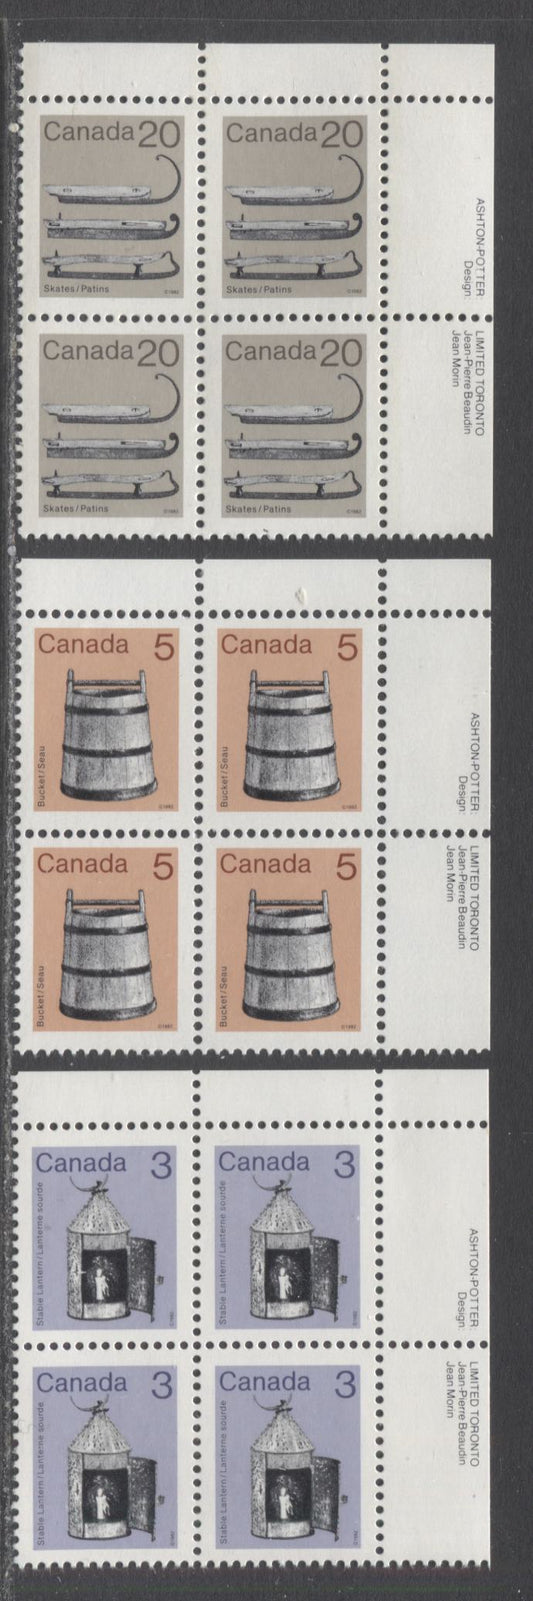 Lot 306 Canada #919i, 920, 922 3c, 5c, 20c Purple/Gray Brown & Multicolored Lantern/Ice Skates, 1982-1897 Low-Value Artifact Definitives, 3 VFNH UR Inscription Blocks Of 4 On LF3-fl/LF3-fl (3c), DF1/DF1 (5c) & DF1/NF (20c) Abitibi Papers